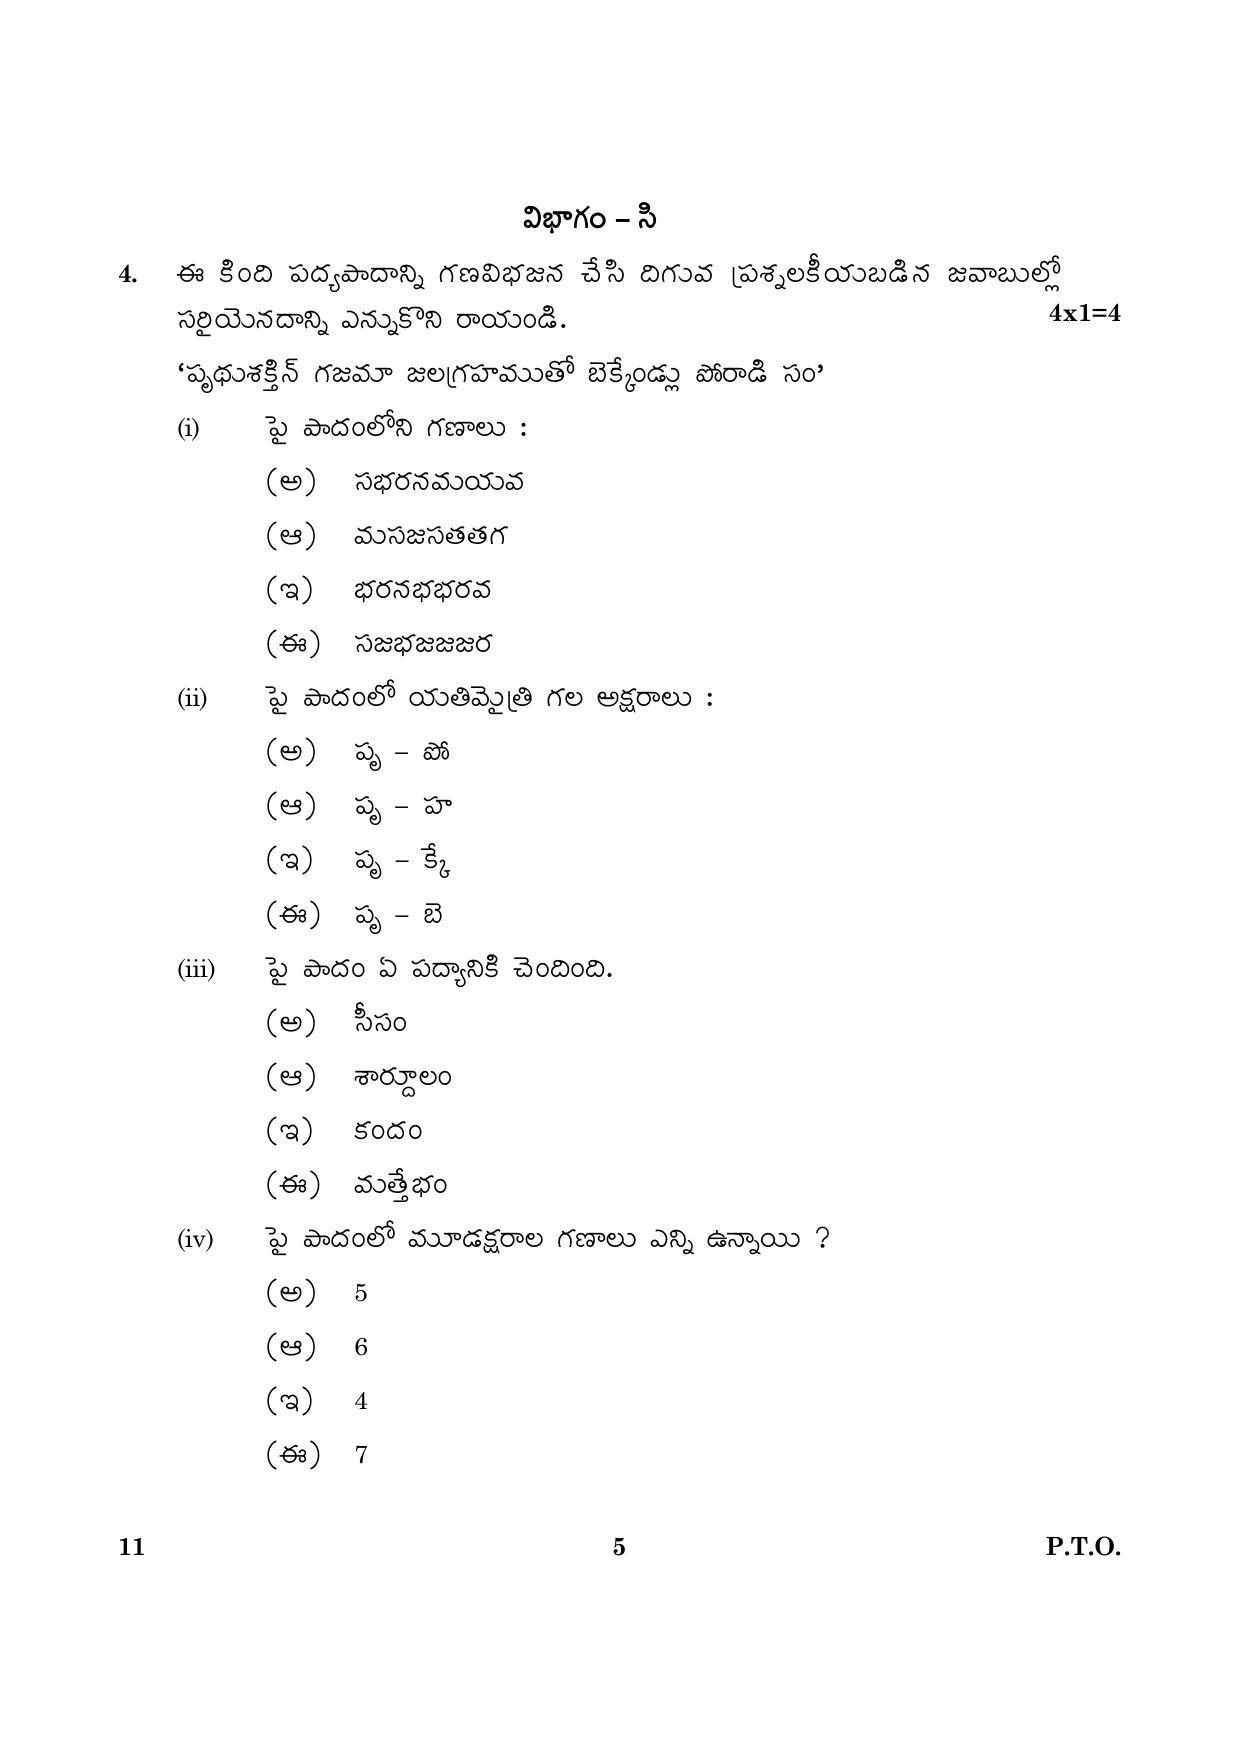 CBSE Class 10 011 Telugu 2016 Question Paper - Page 5